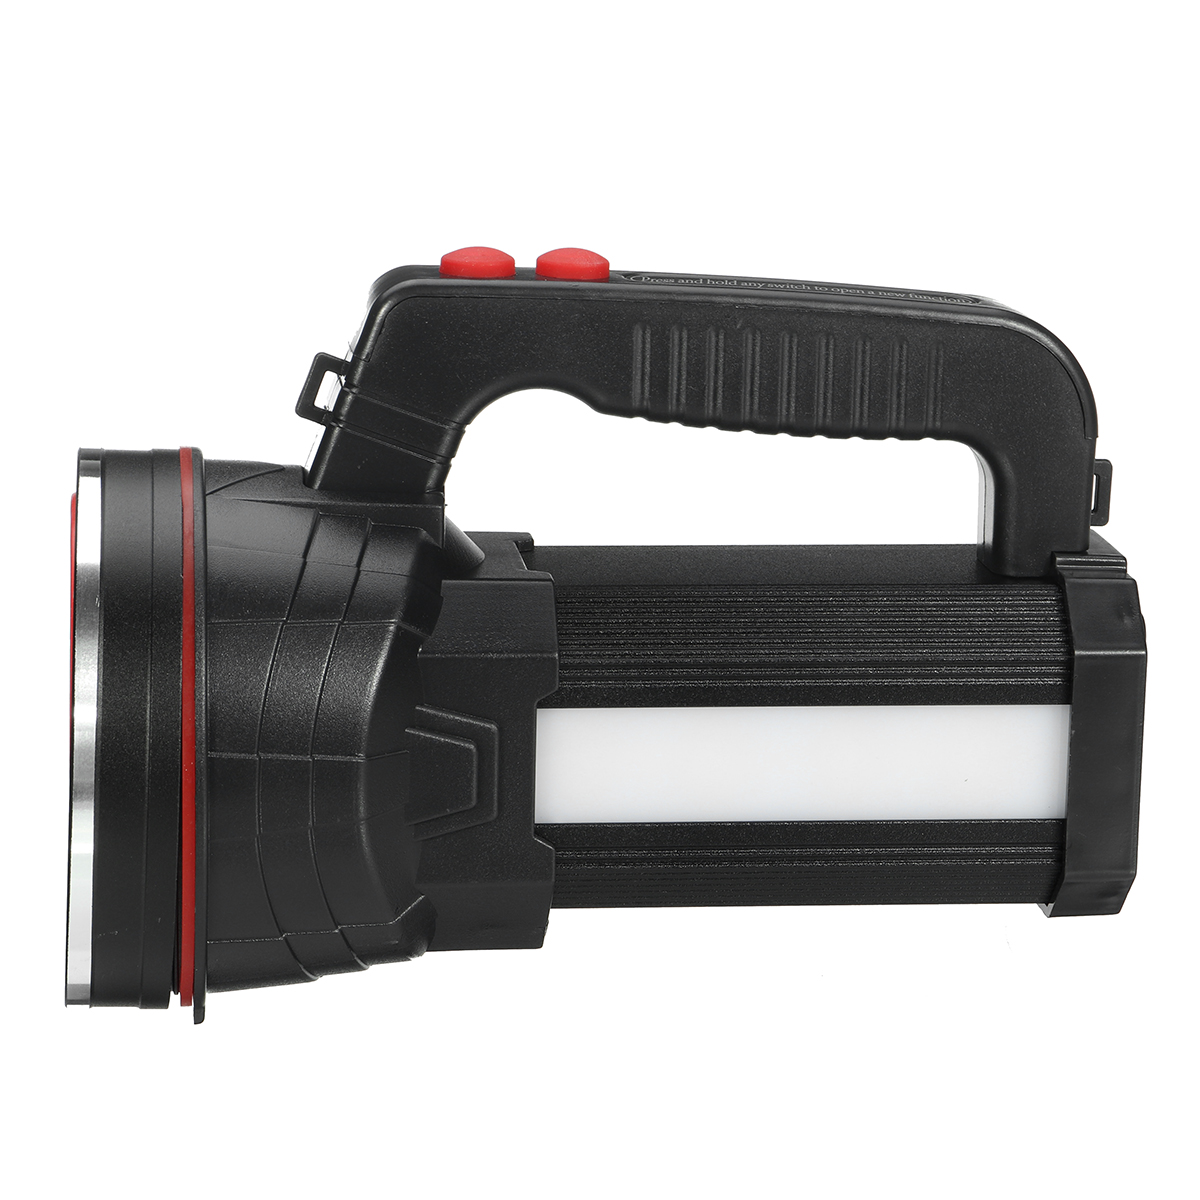 Spotlight-Super-Bright-LED-Flashlight-2-Modes-USB-Rechargeable-Floodlight-LED-Flashlight-Fishing-Hun-1887806-3